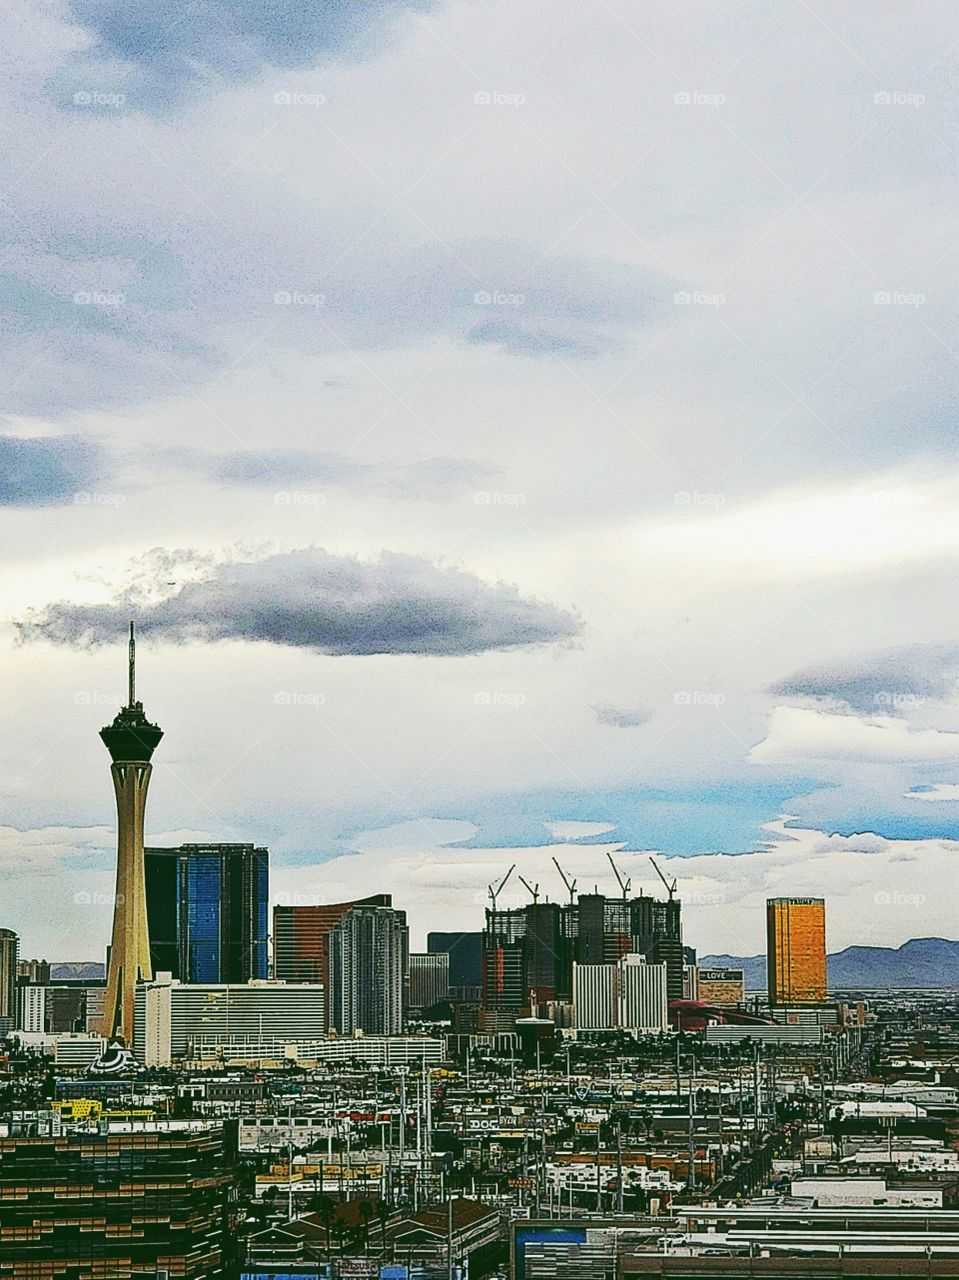 Las Vegas skyline--constantly under construction!